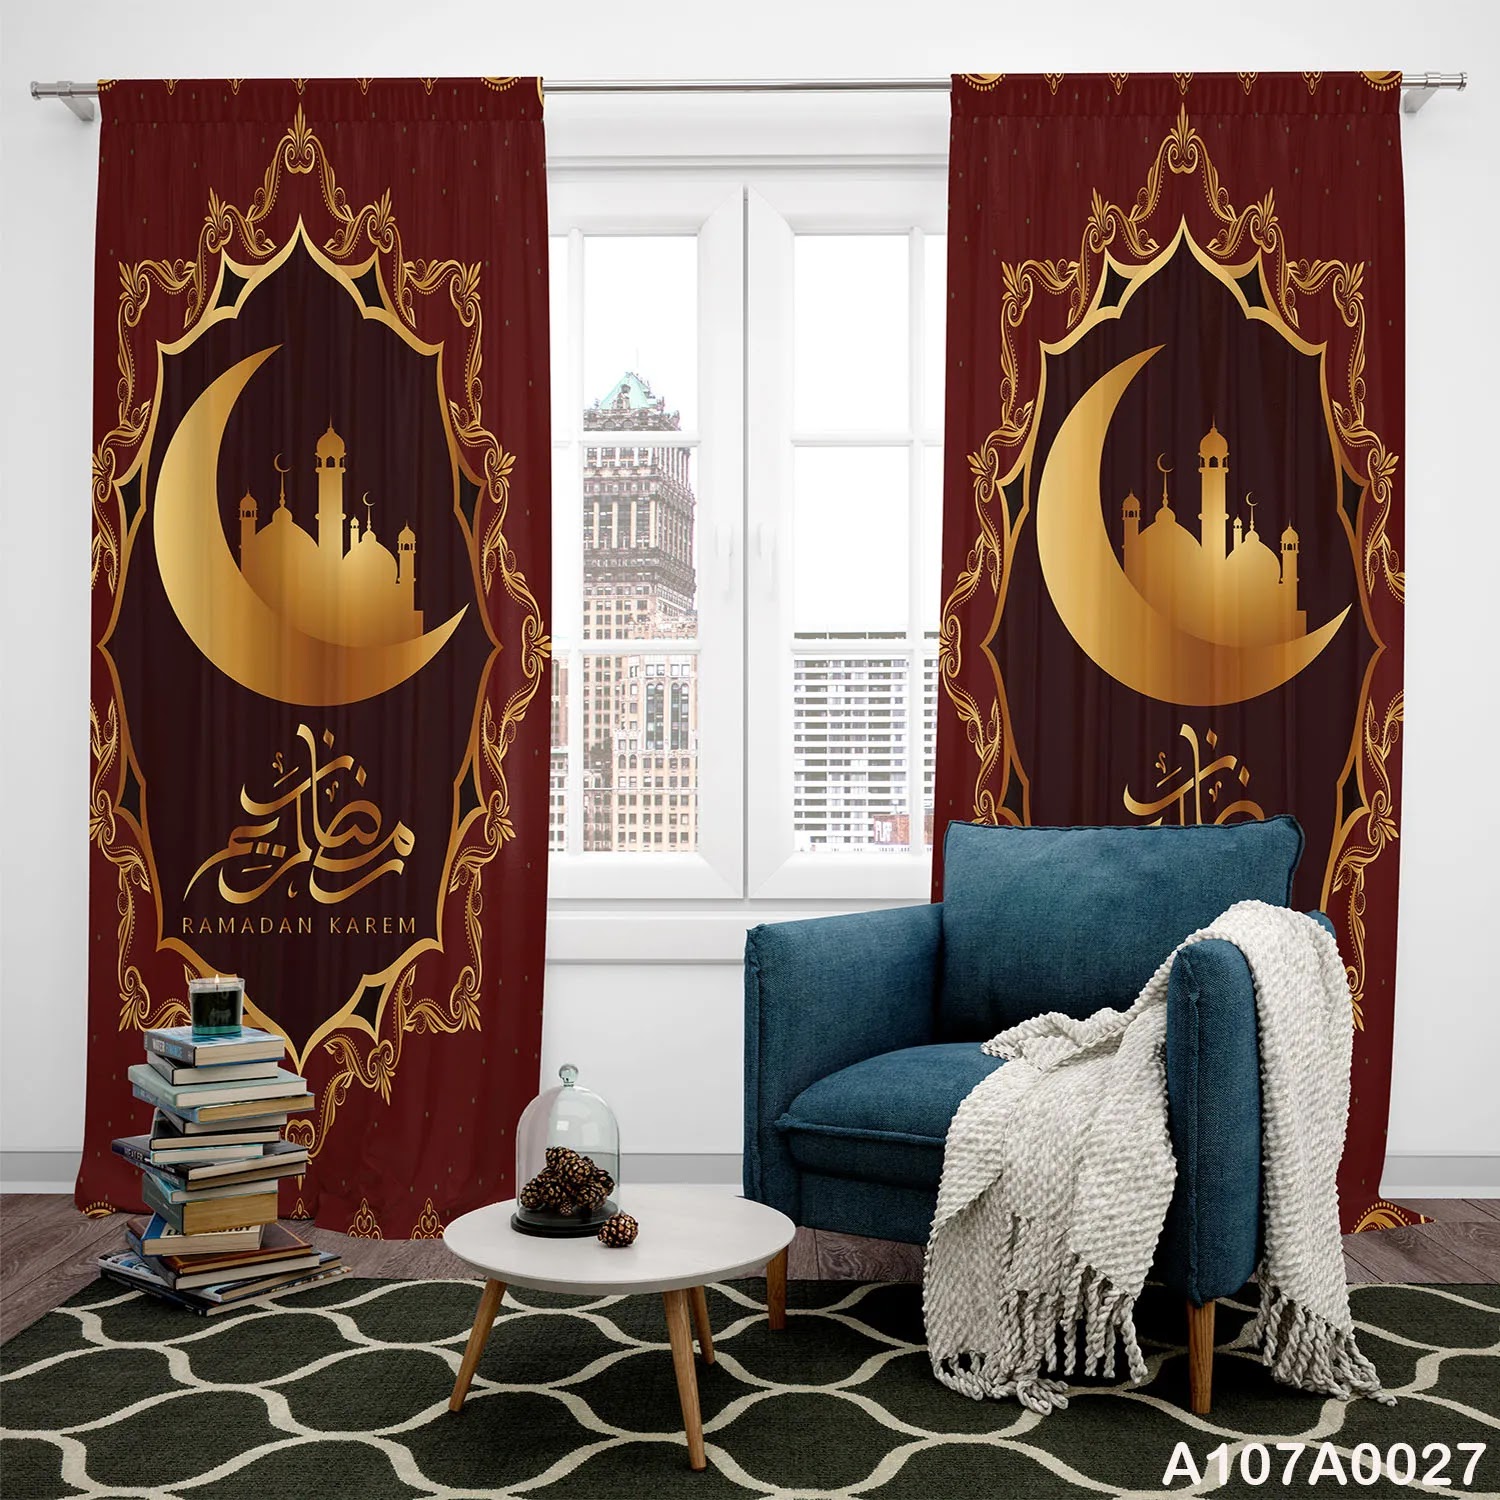 Curtains in burgundy and brown for Rmadan kareem